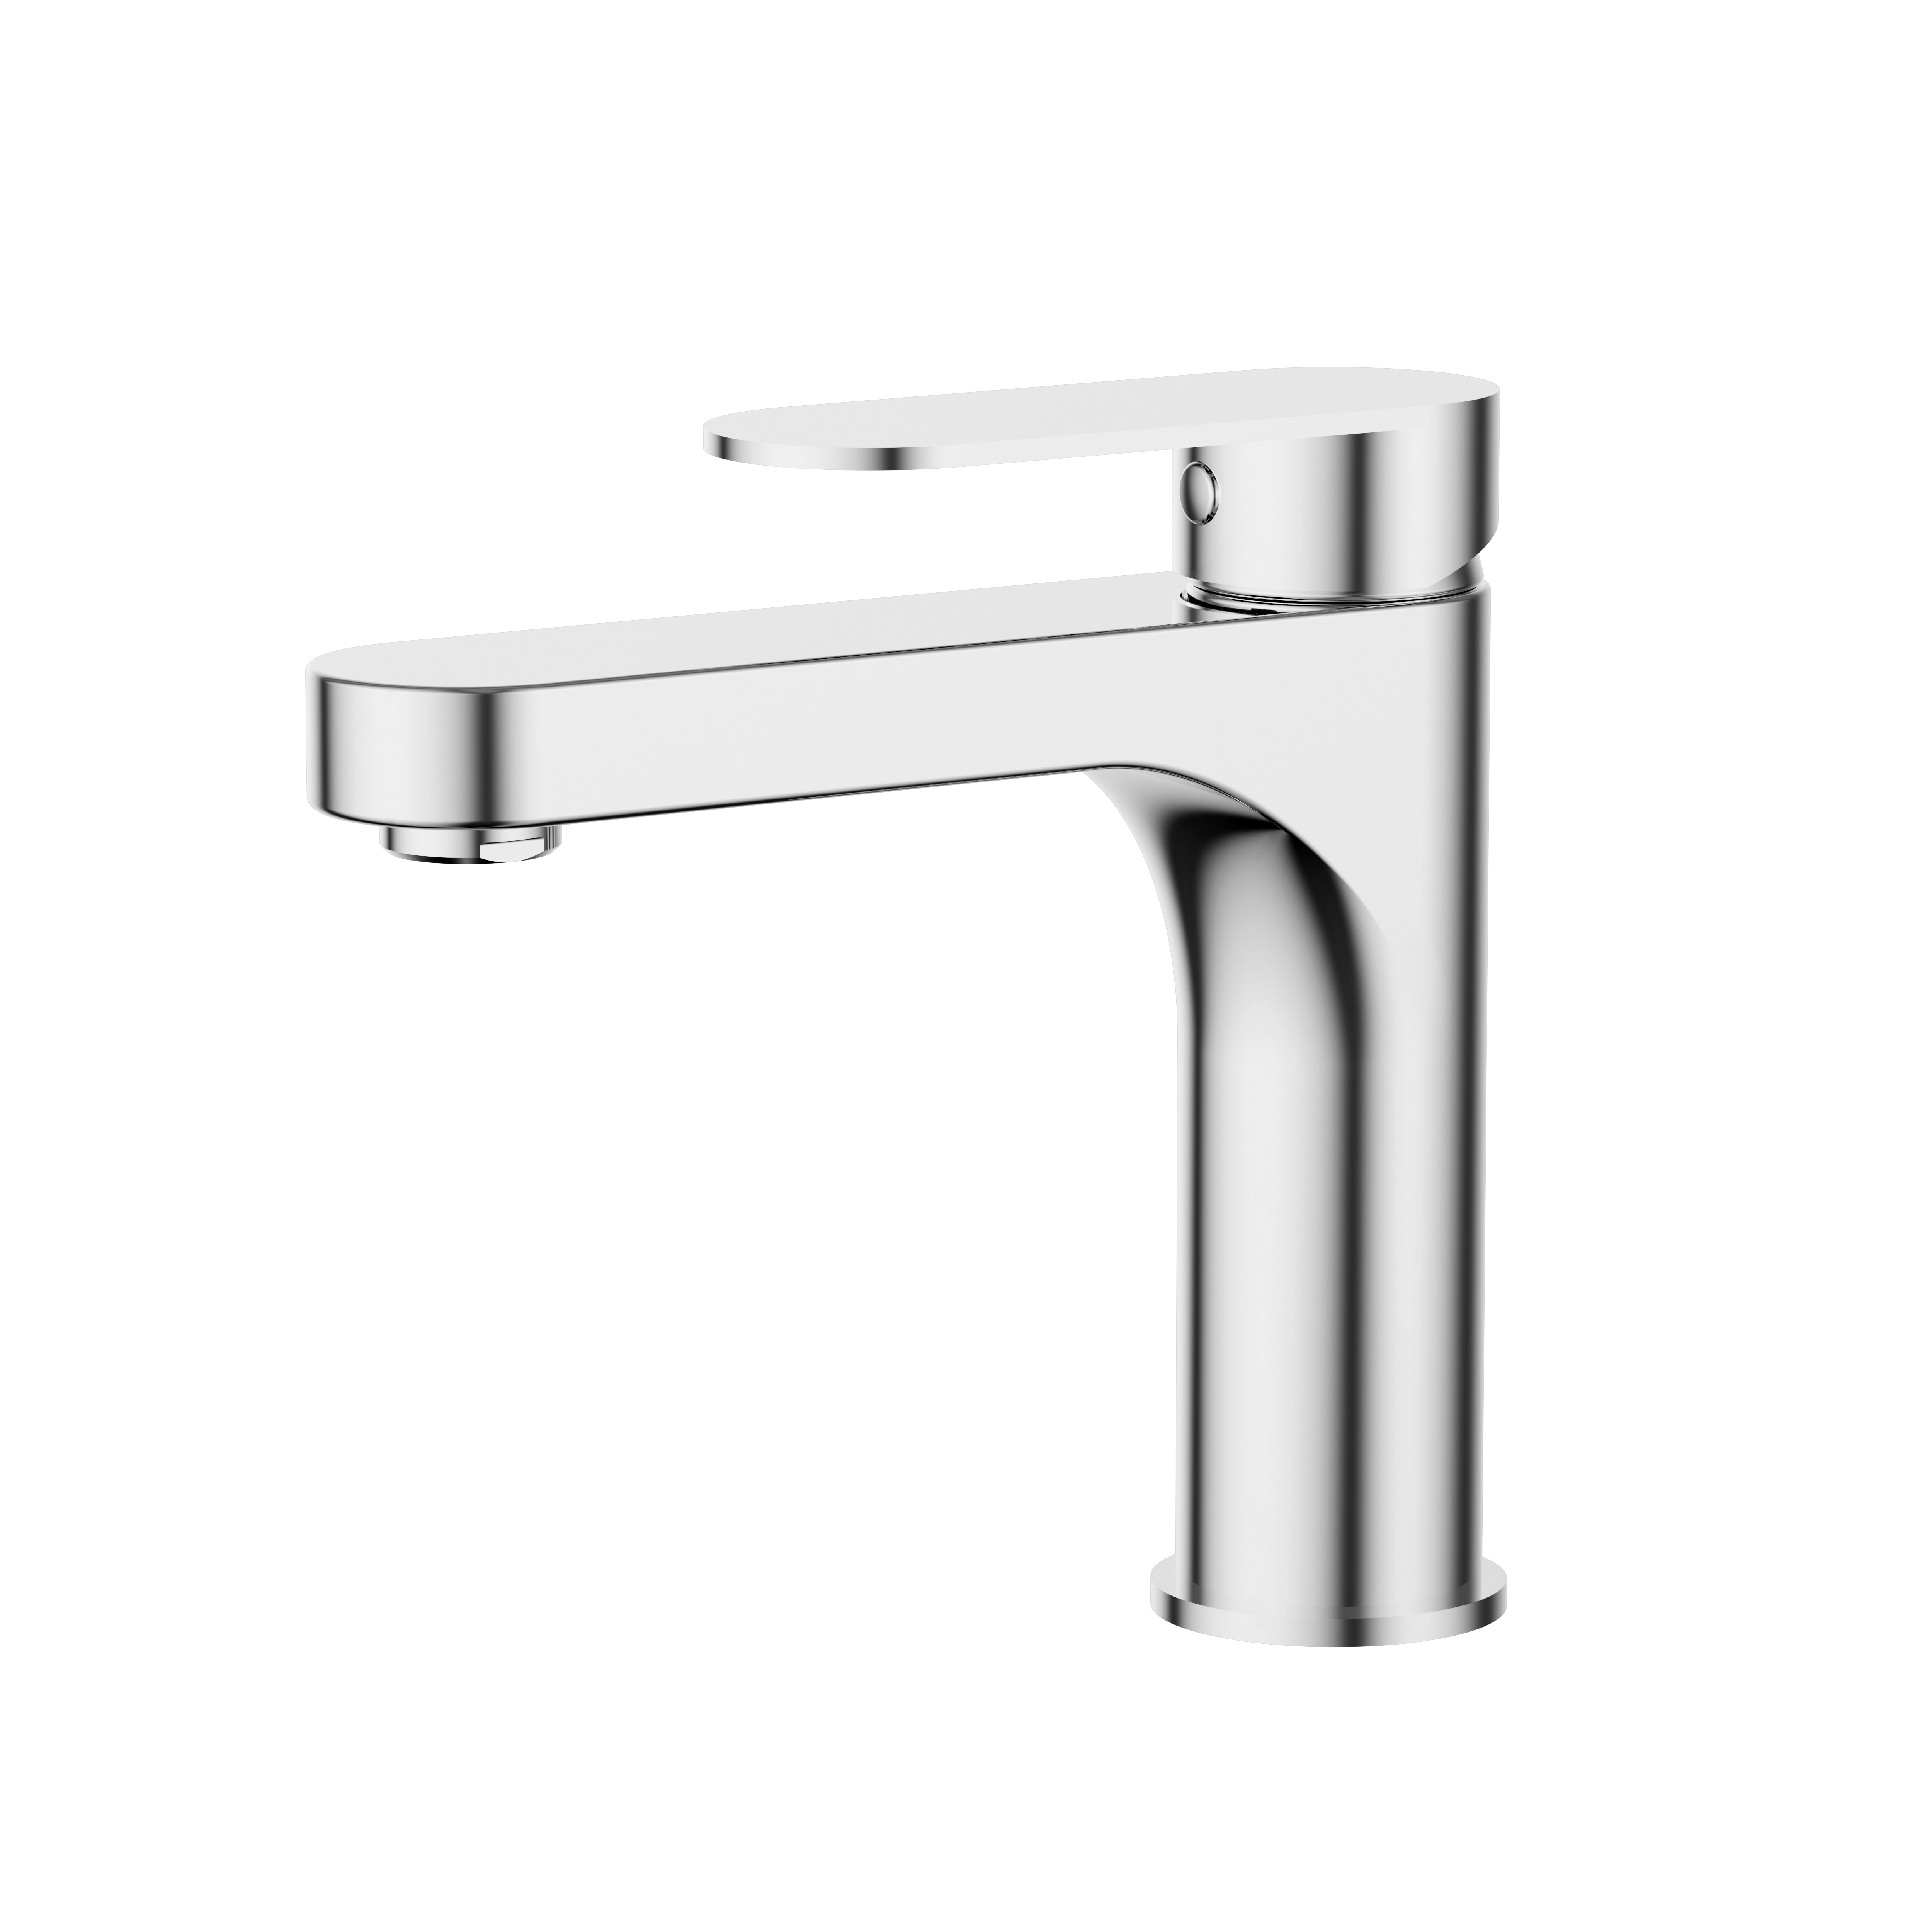 Conventional bathroom Basin Faucet Chrome